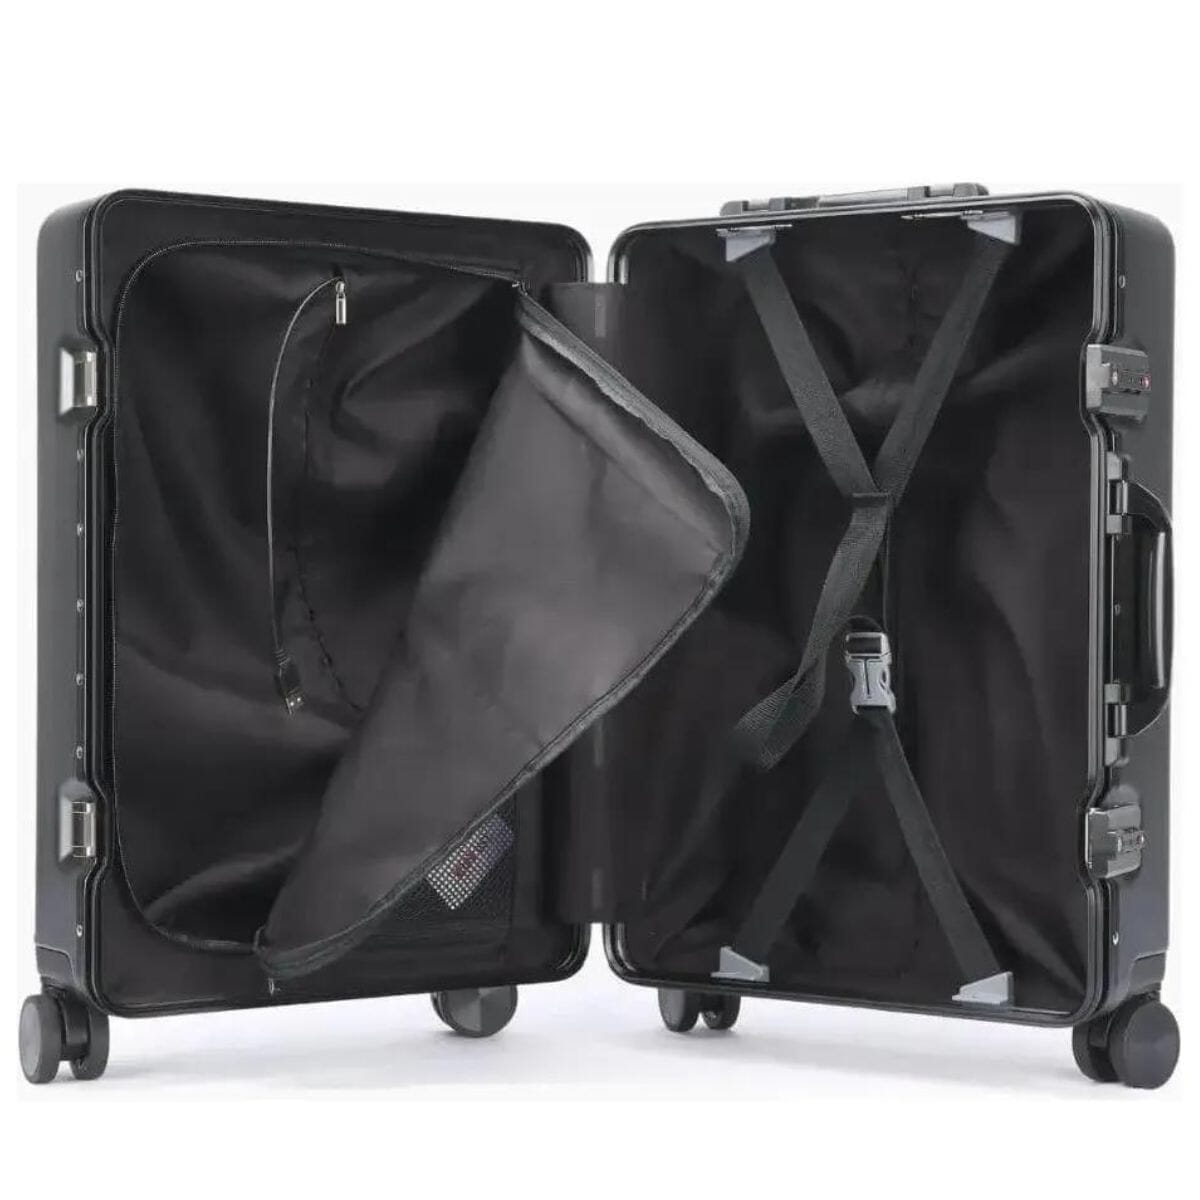 Wrangler 20” Carry-on Rolling Hardside Spinner Luggage Black 